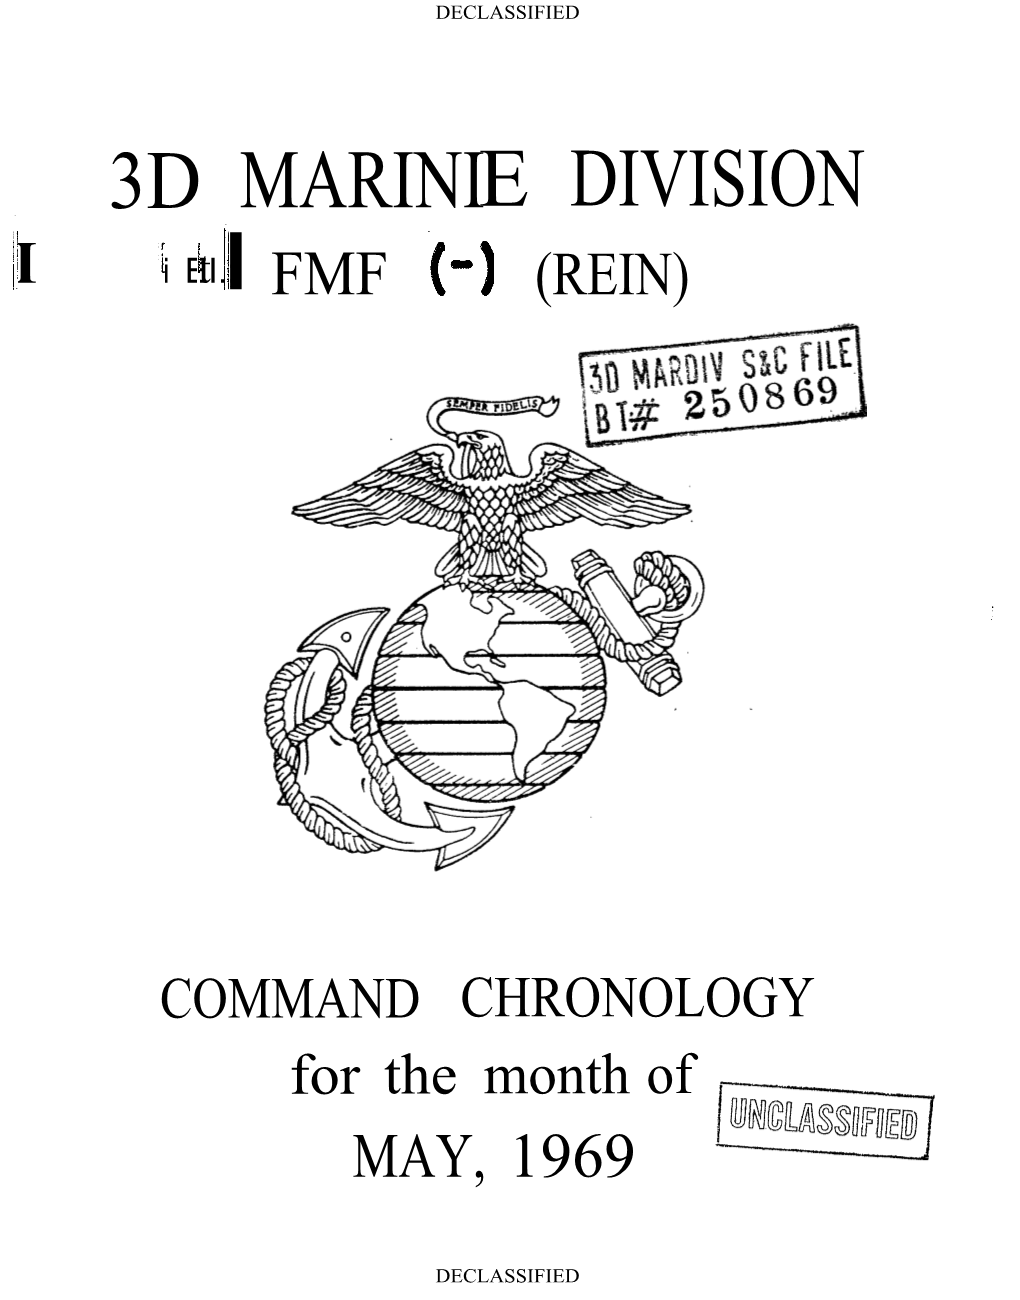 3D Marini E Division